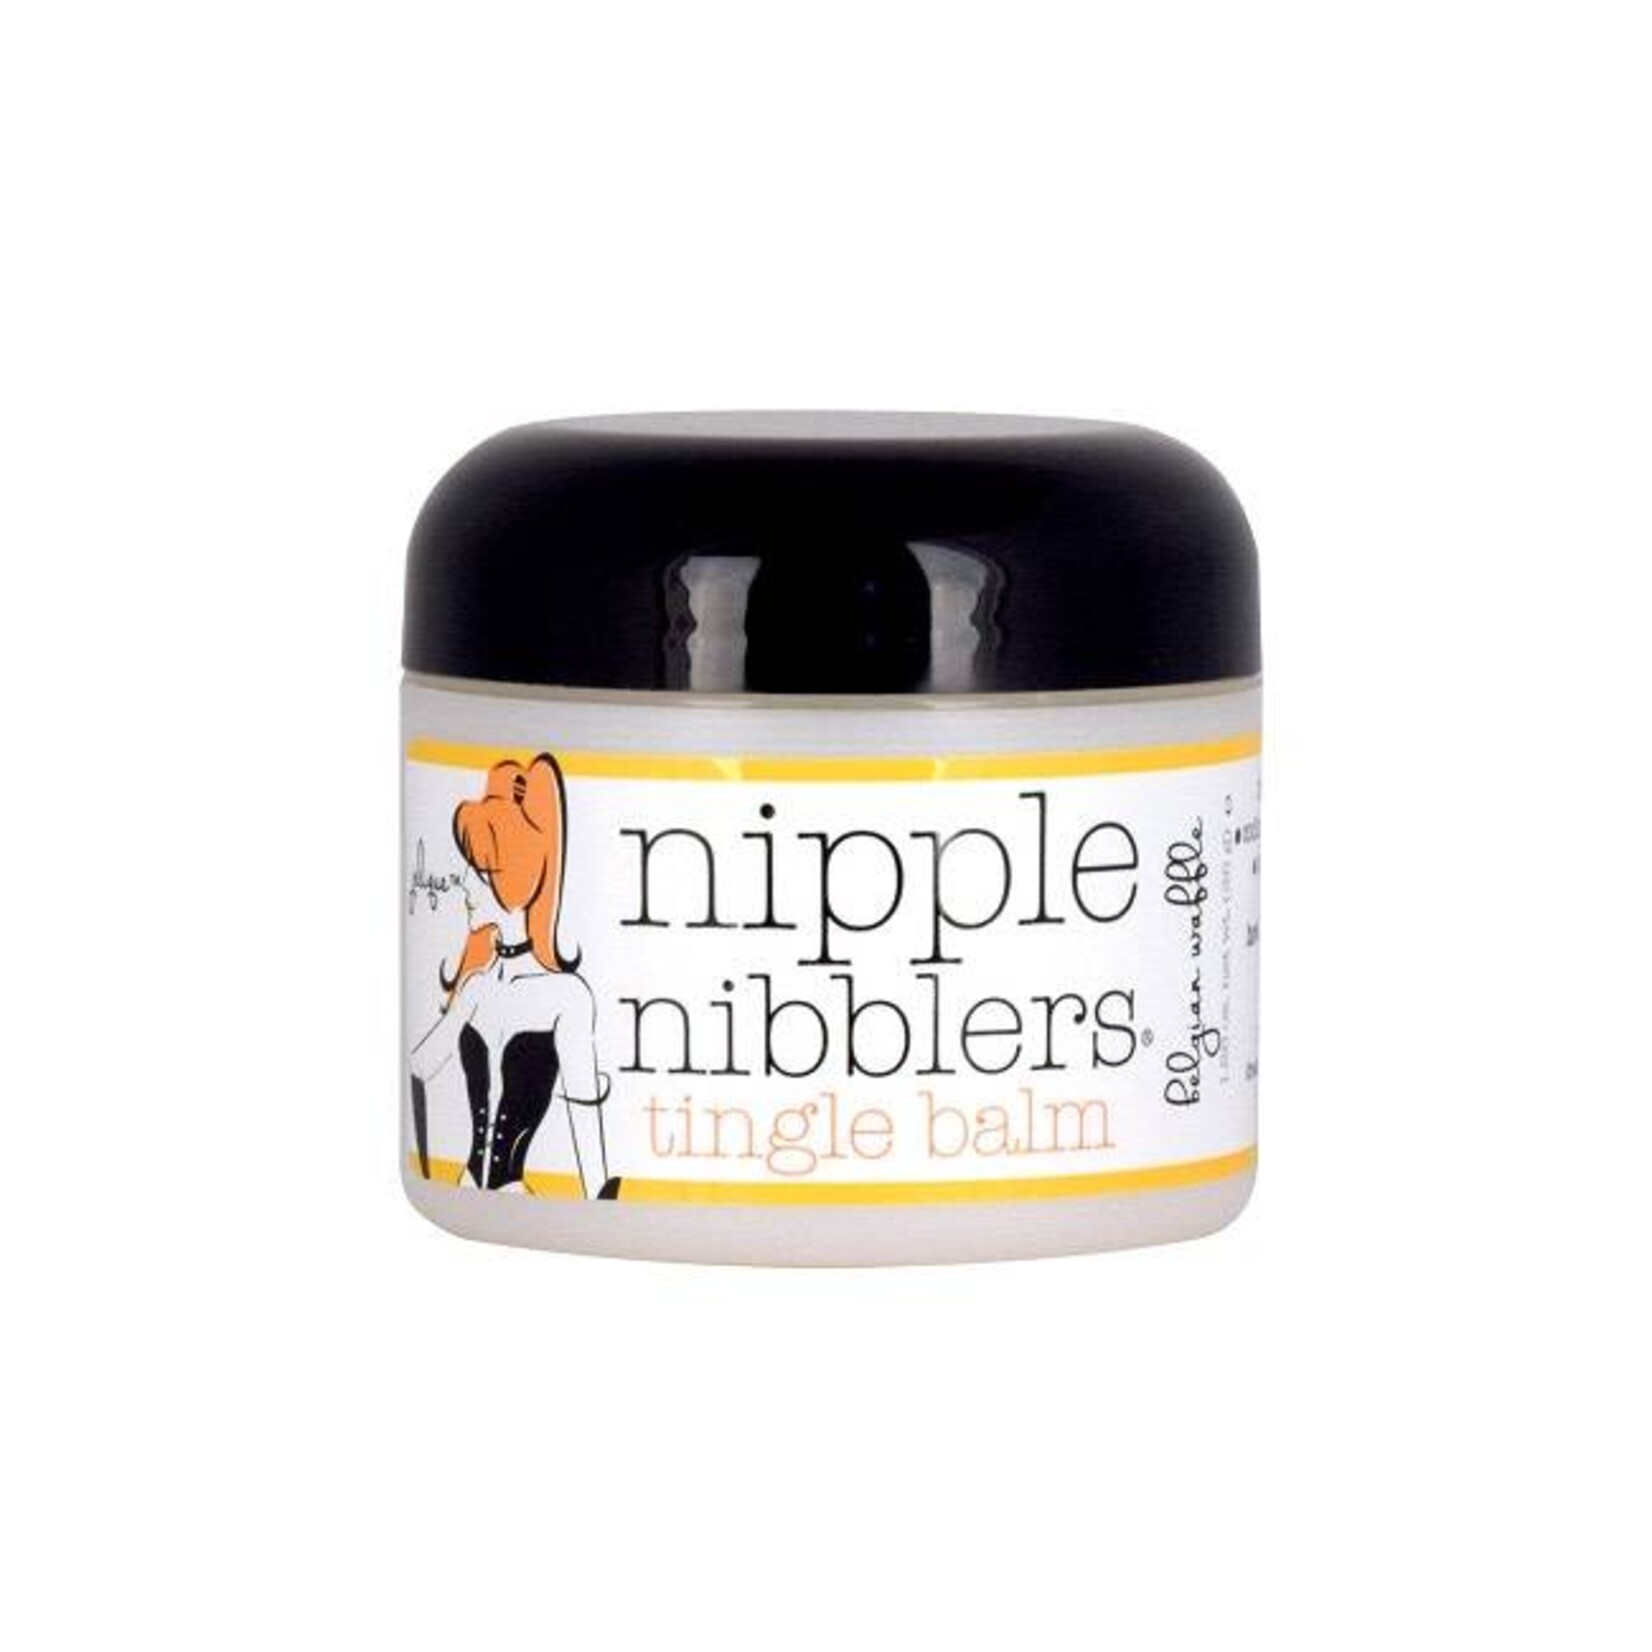 Nipple Nibblers Tingle Balm Jar 1.25oz